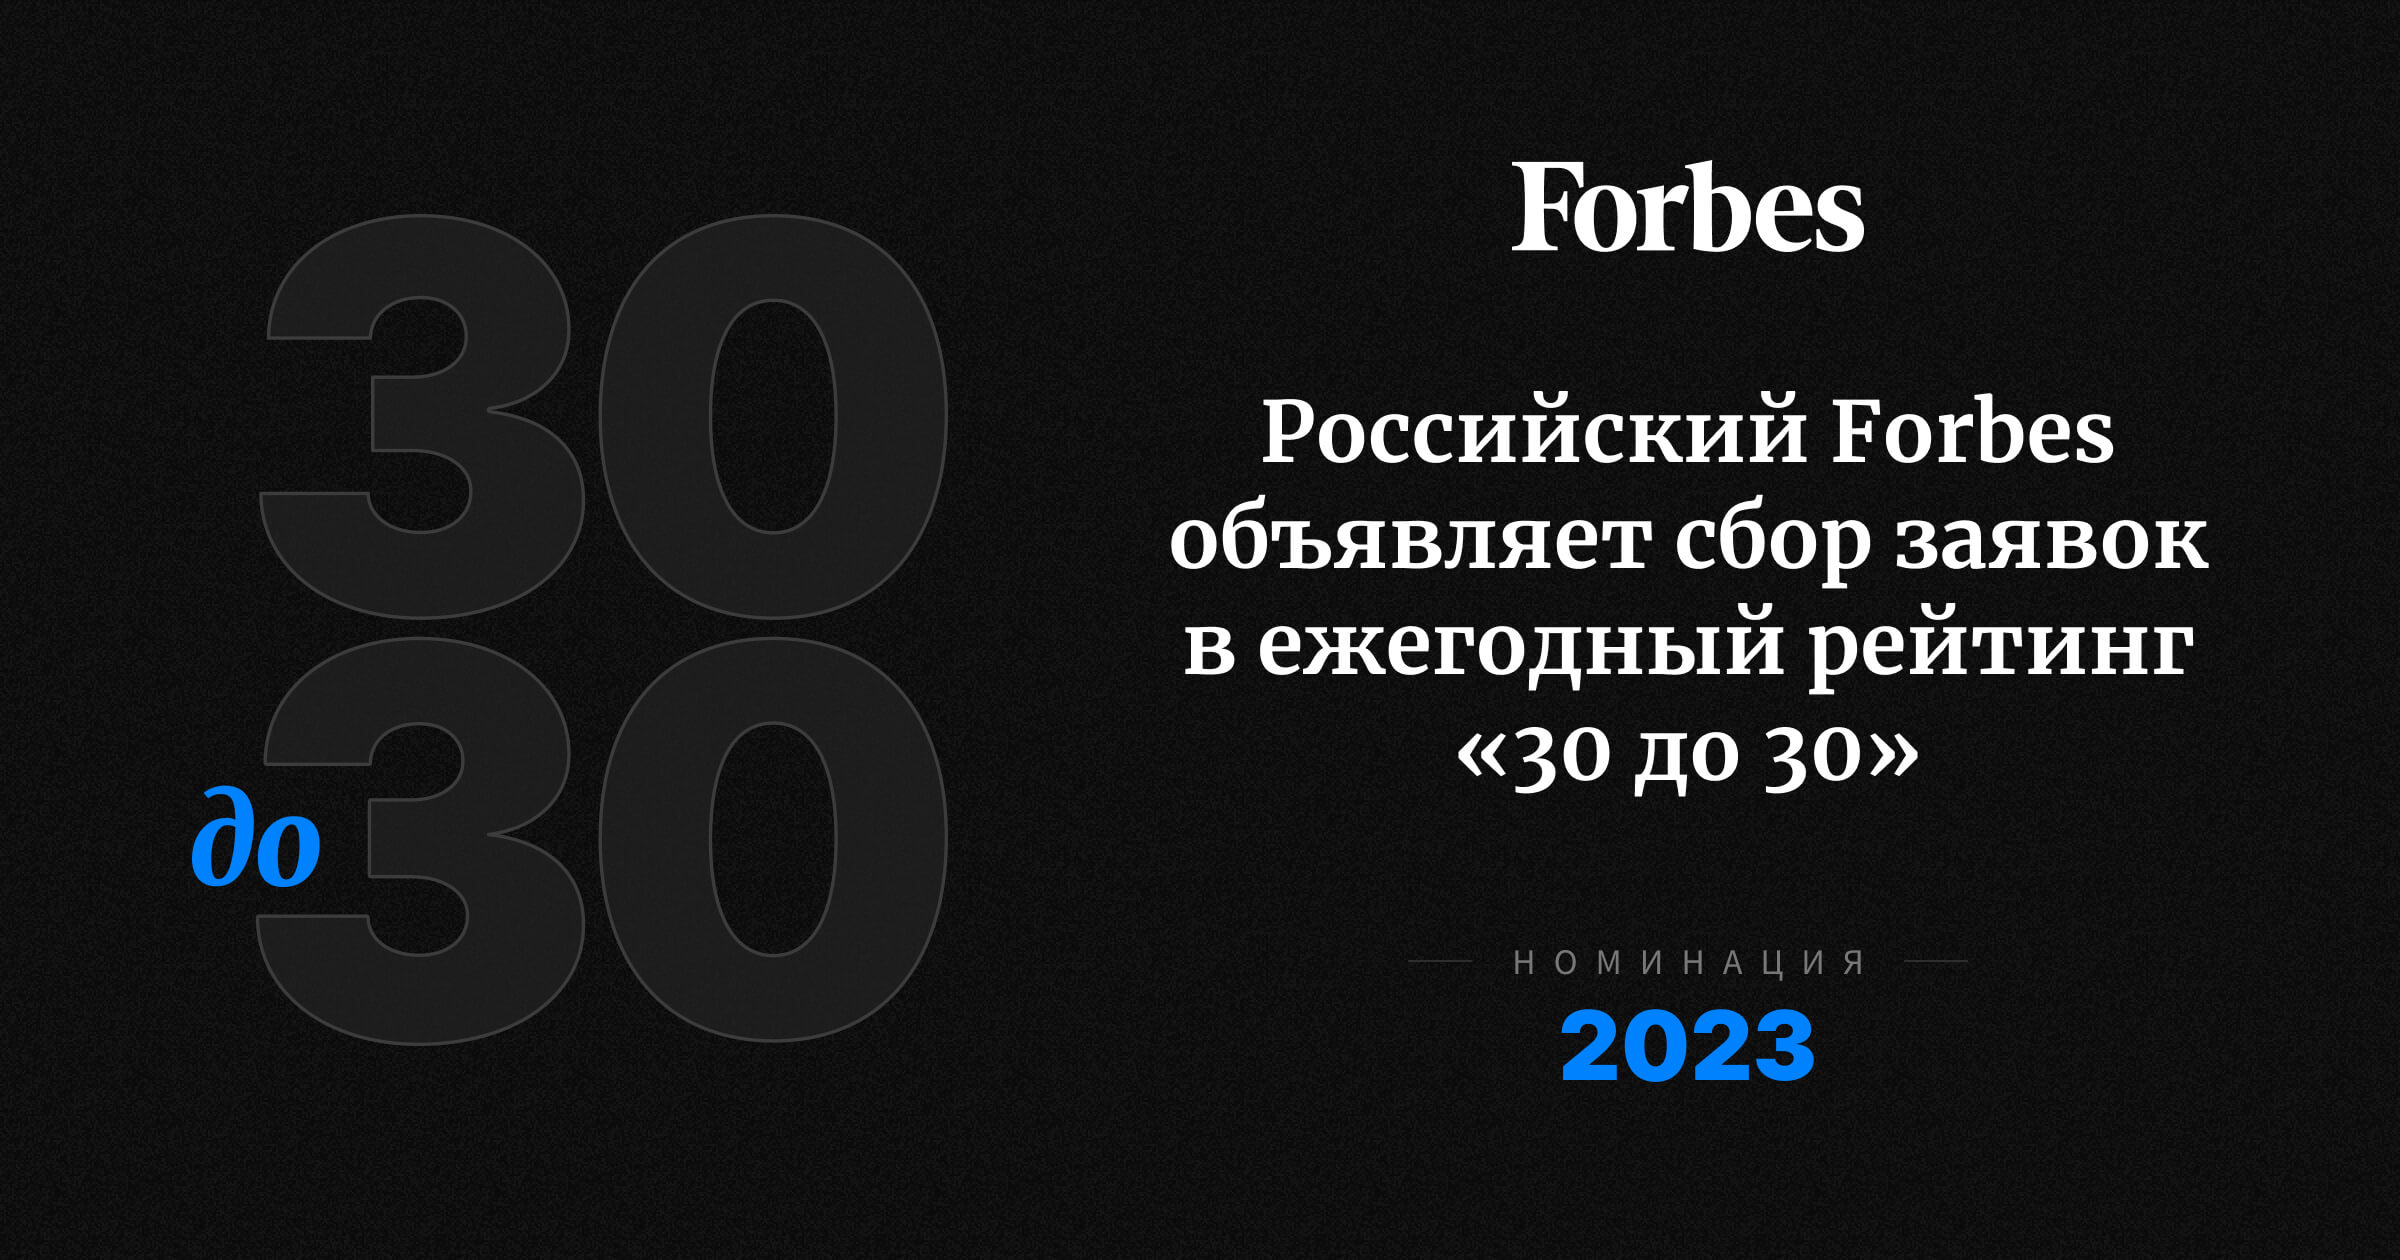 Список forbes 2024. Форбс 30 до 30. Forbes 30/30. Список форбс 2023 в России до 30 лет. Forbes 30 до 30 обложка.